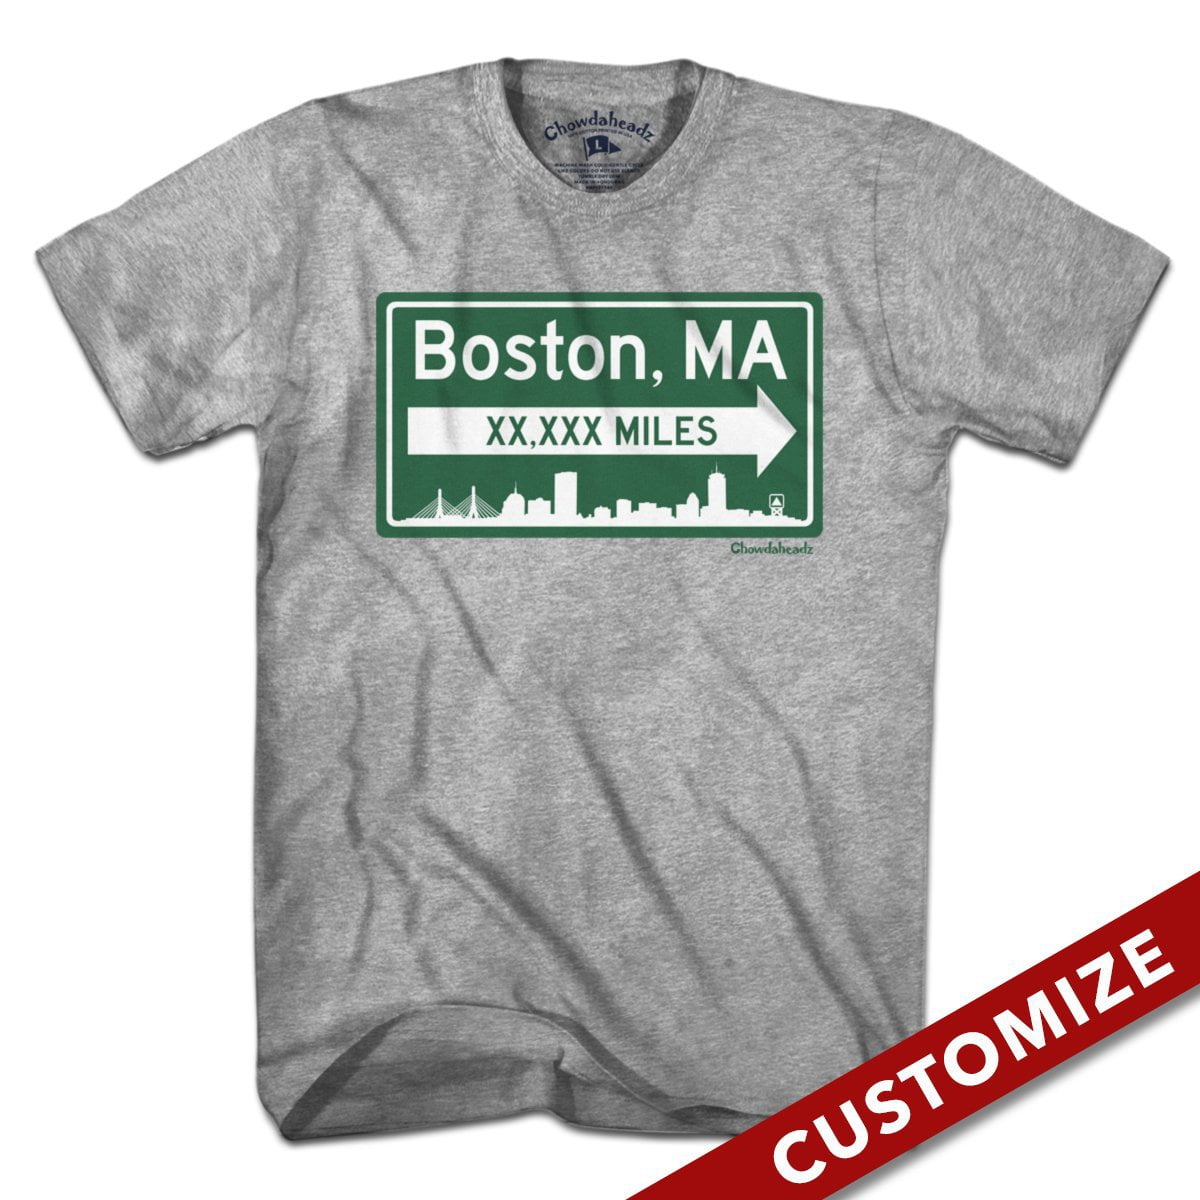 Custom Miles to Boston Sign T-Shirt - Chowdaheadz